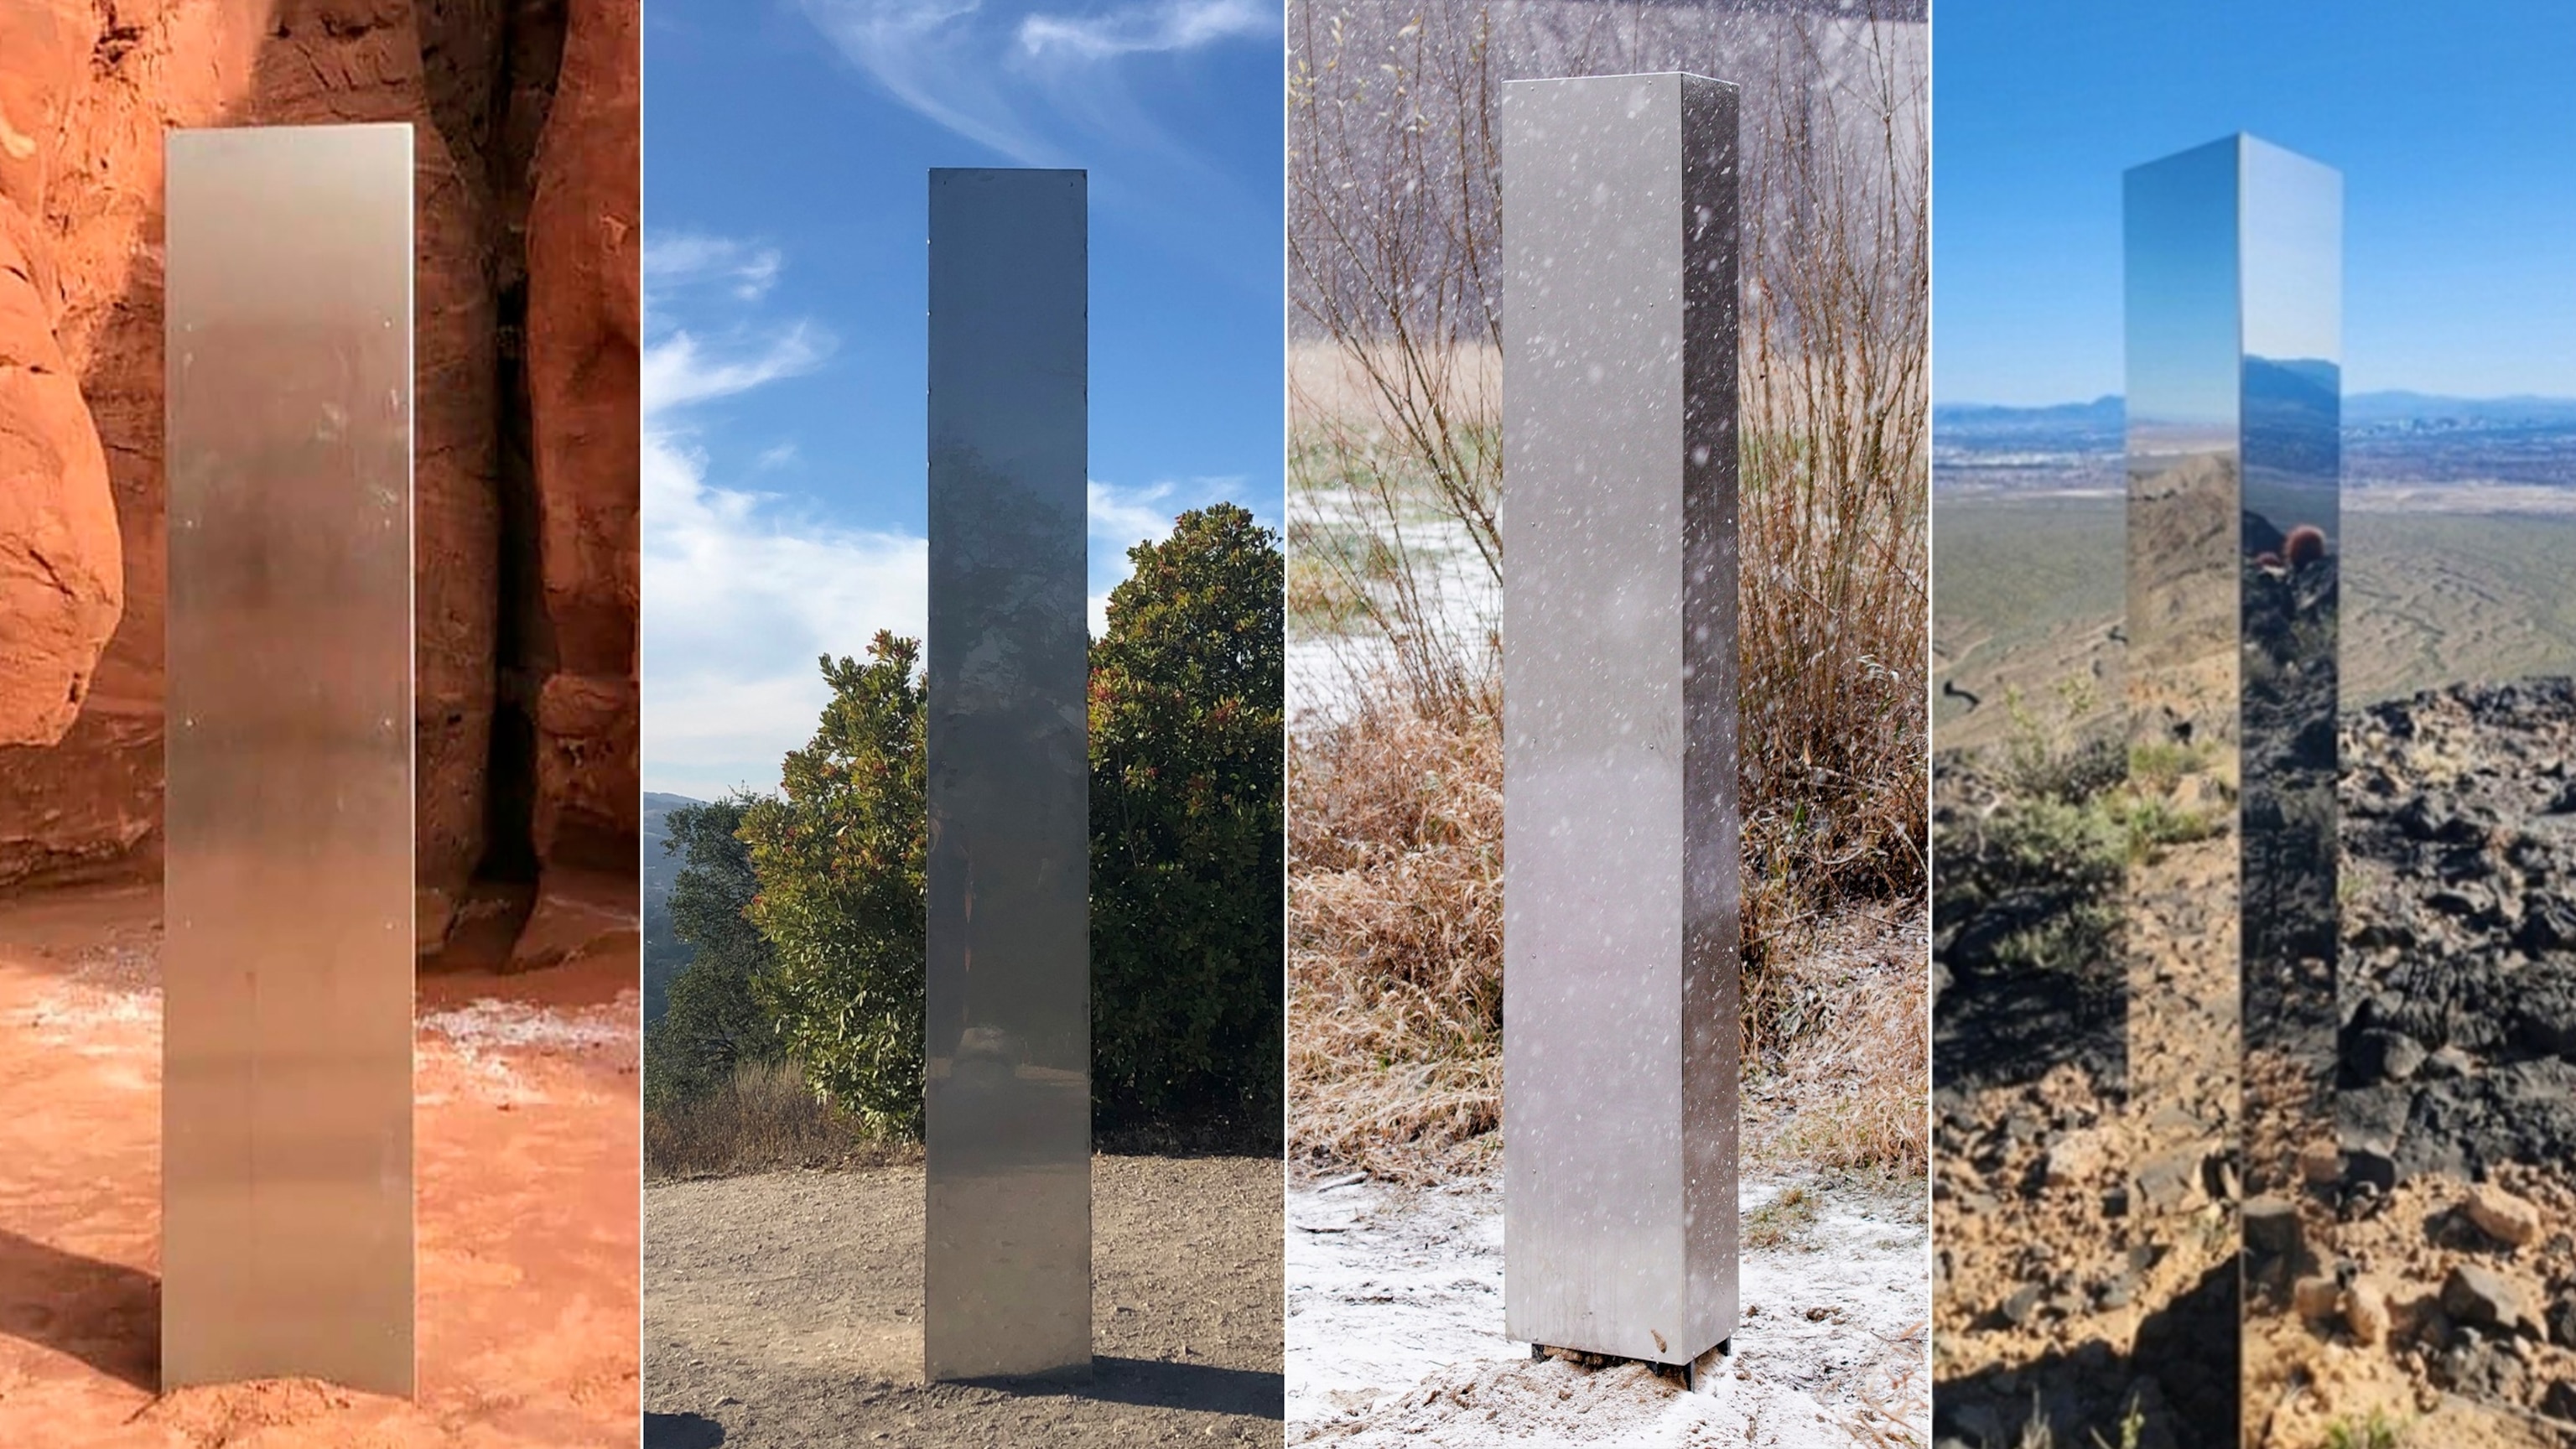 PHOTO: Monoliths in Utah, California, Warsaw, Poland, and Las Vegas